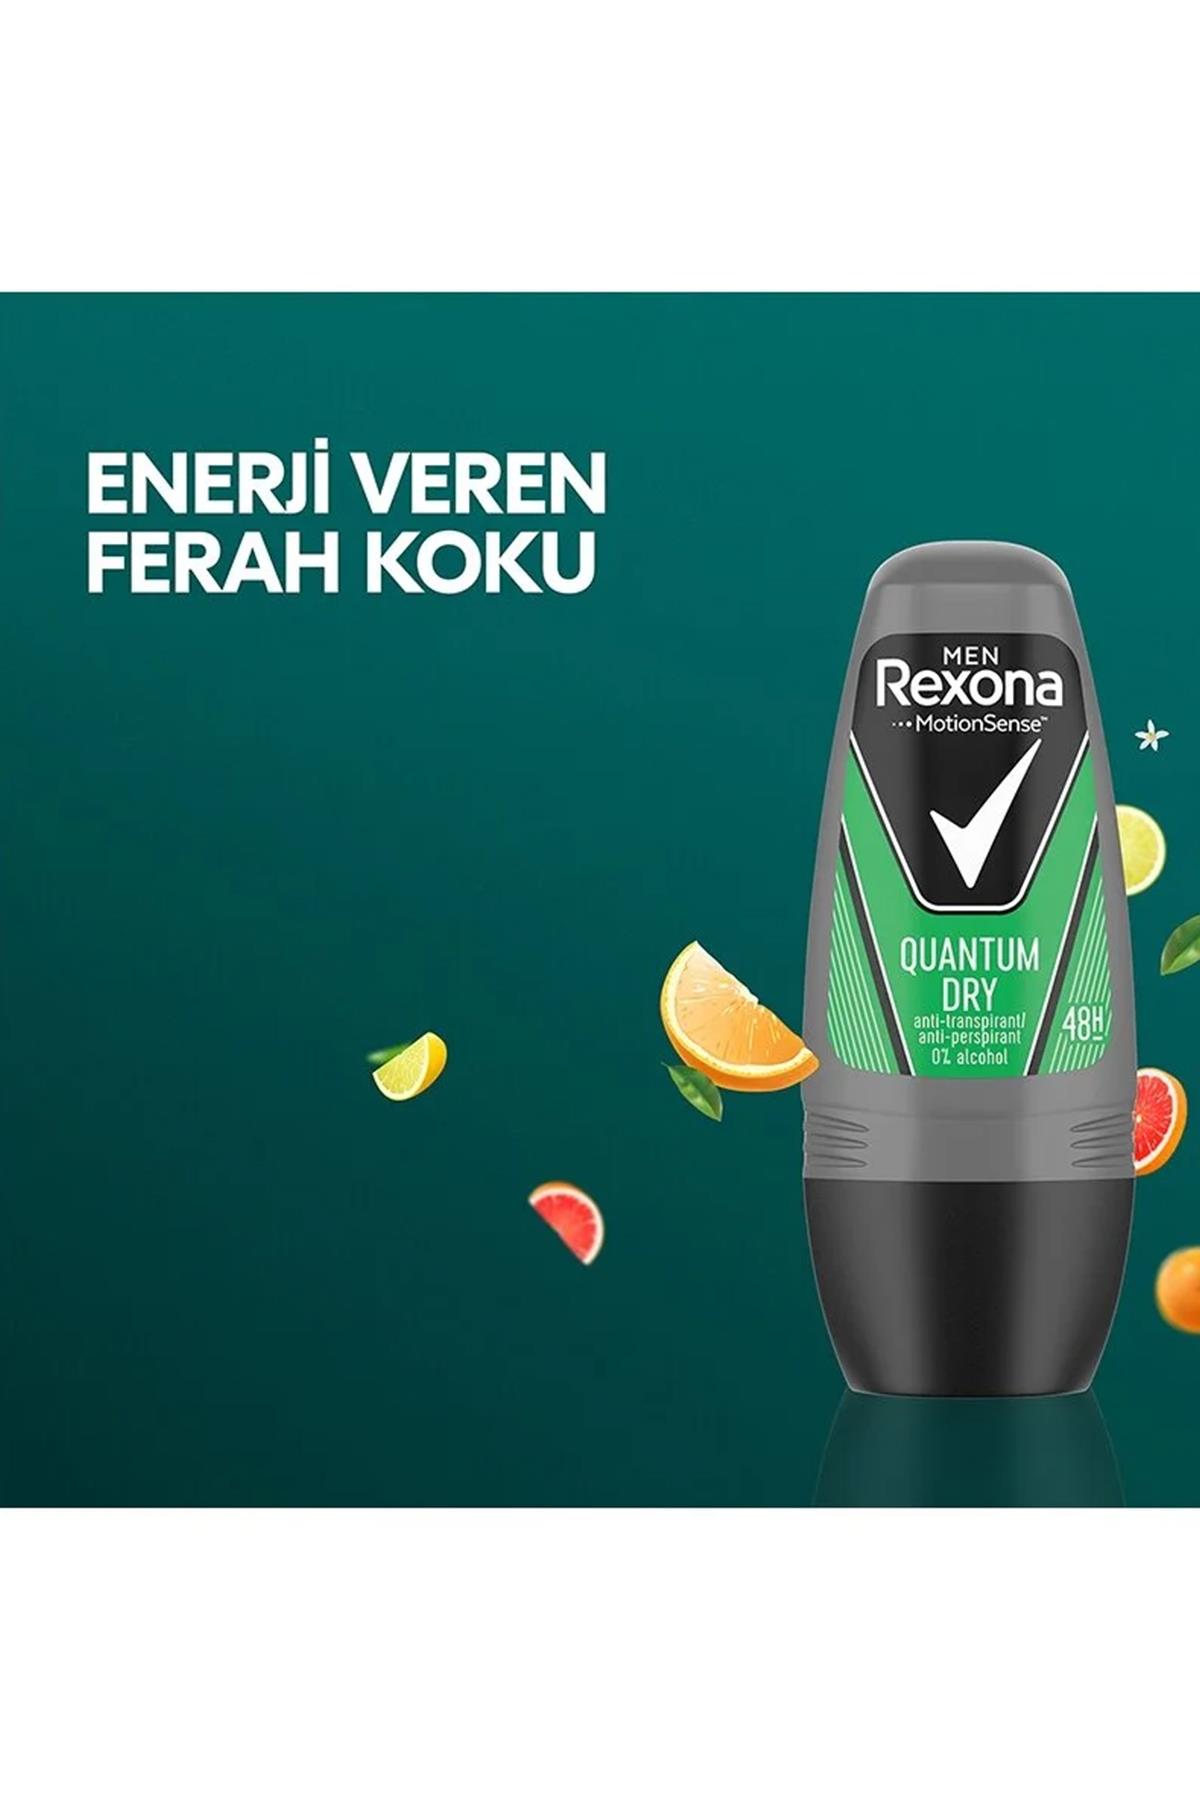 rexona-men-quantum-dry-erkek-deodorant-sprey-50-ml-9461-1.jpg